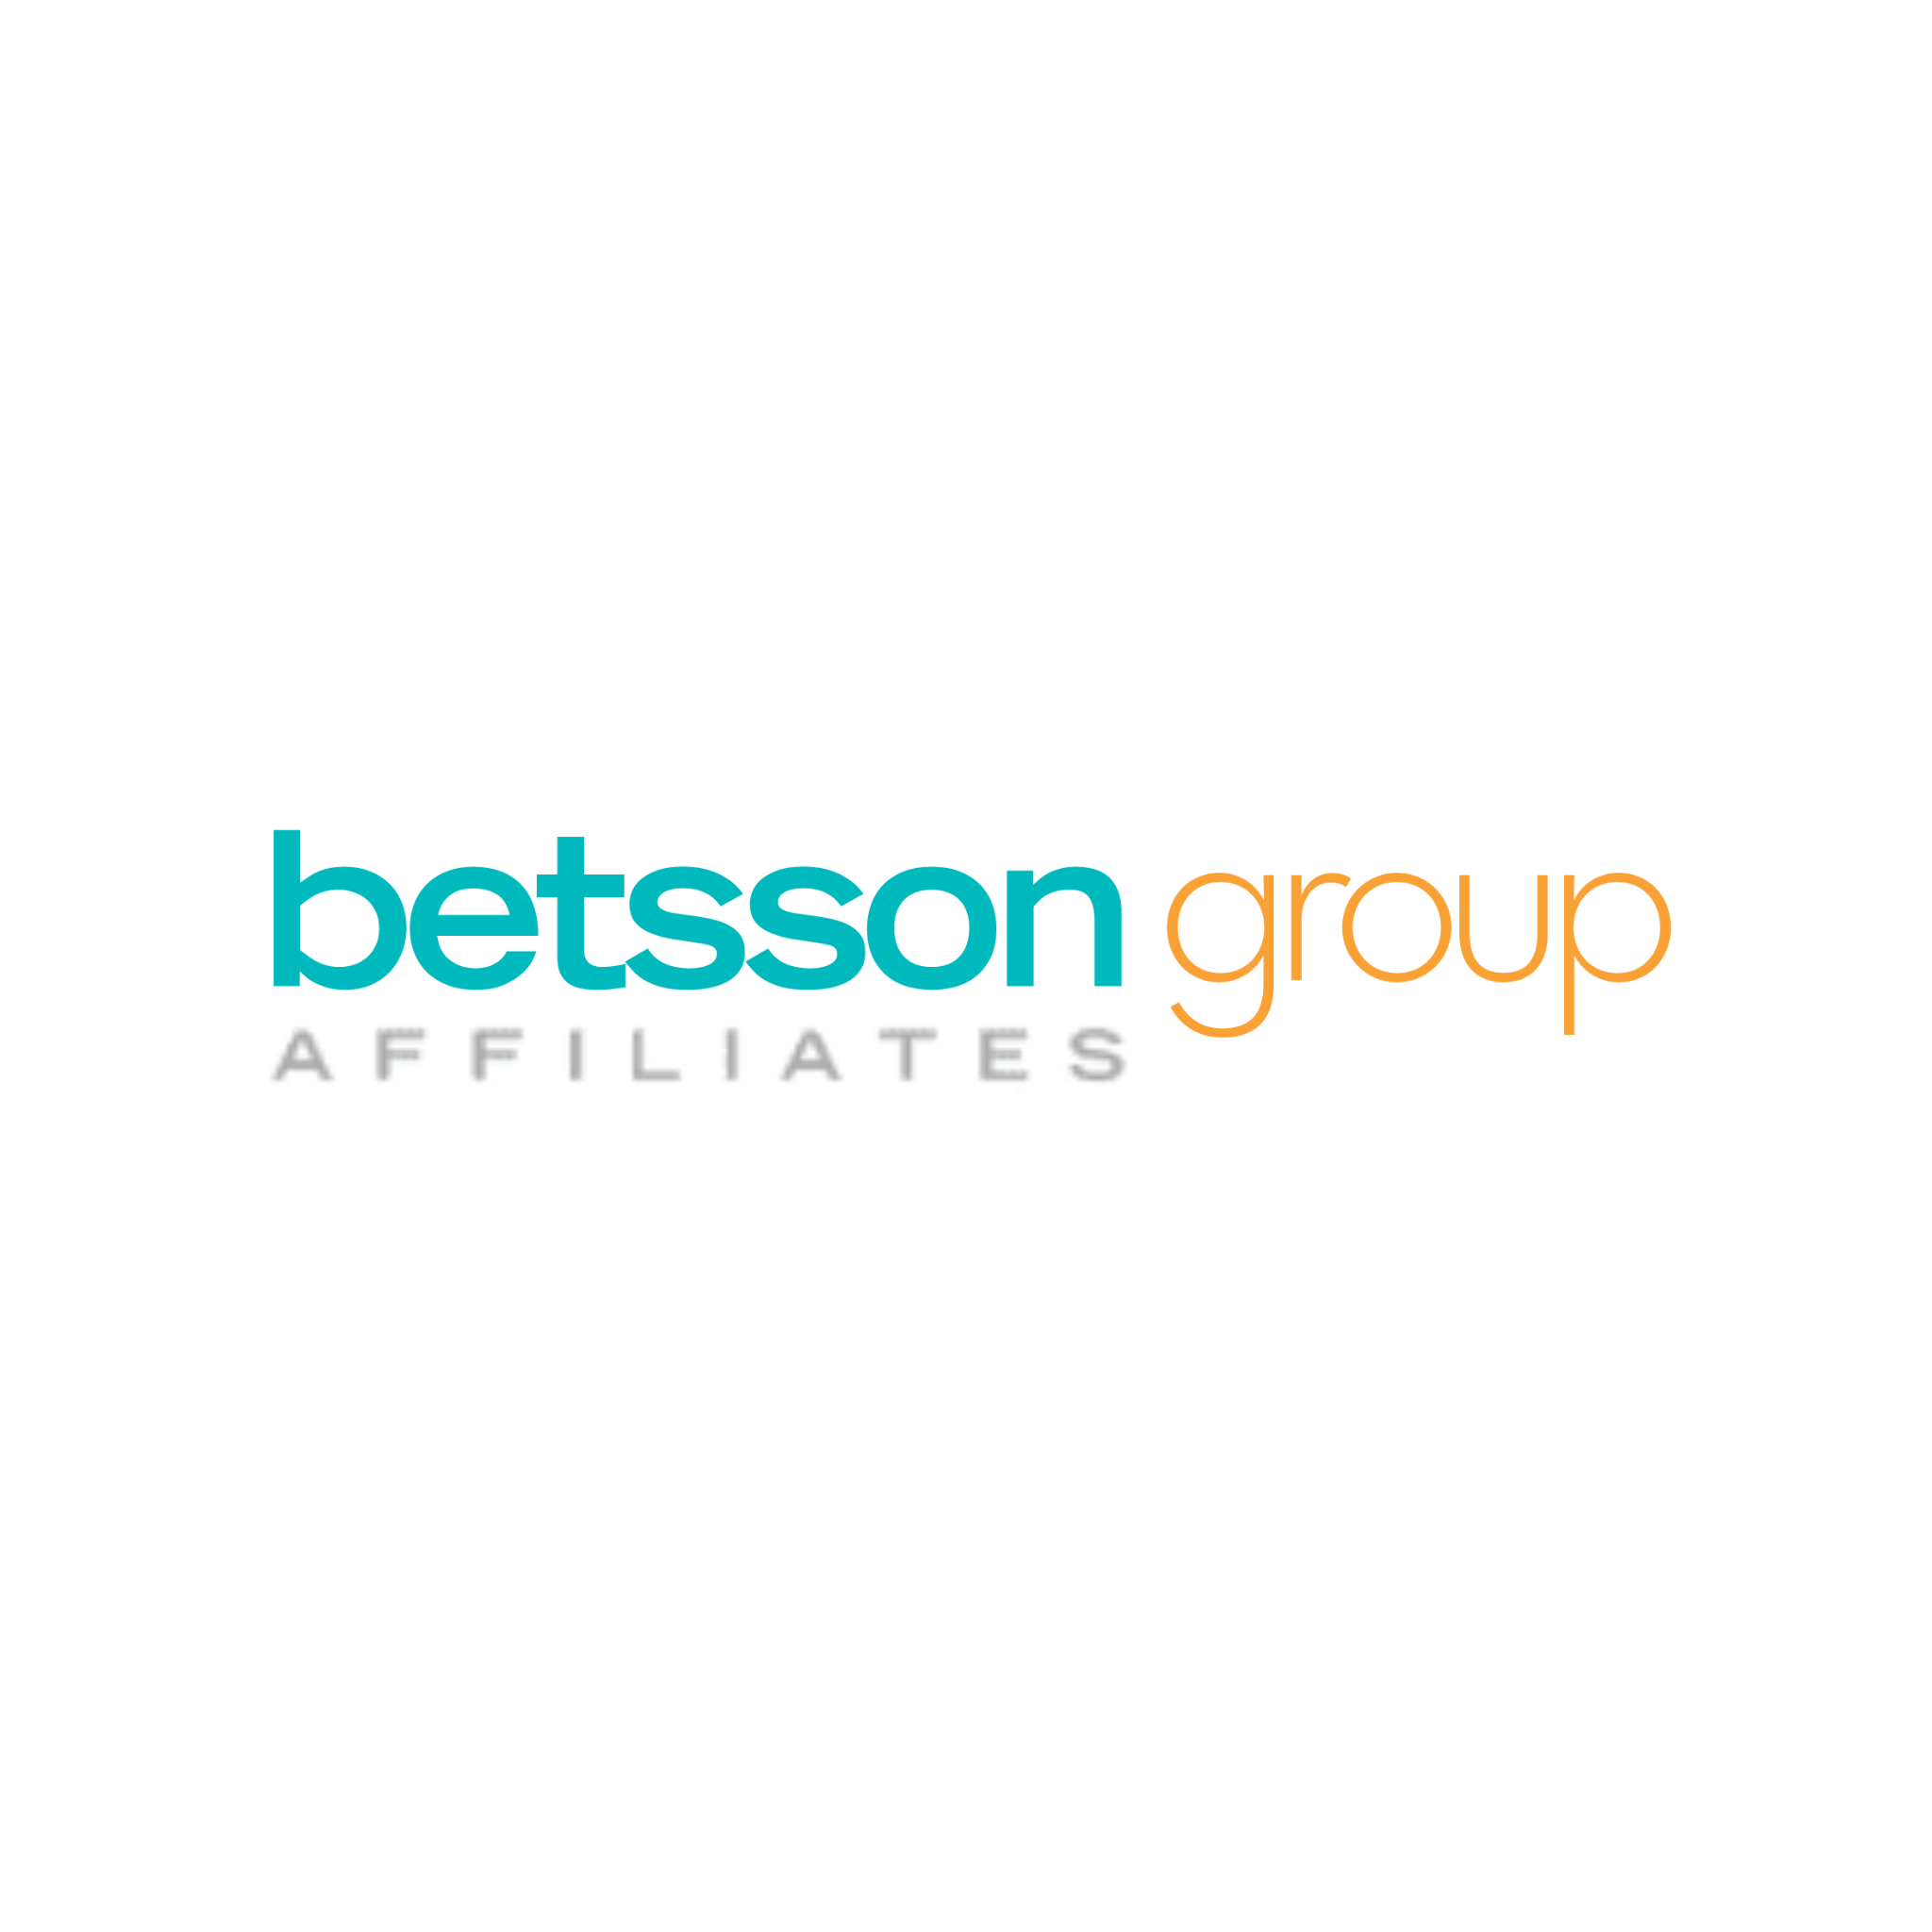 Betsson Group